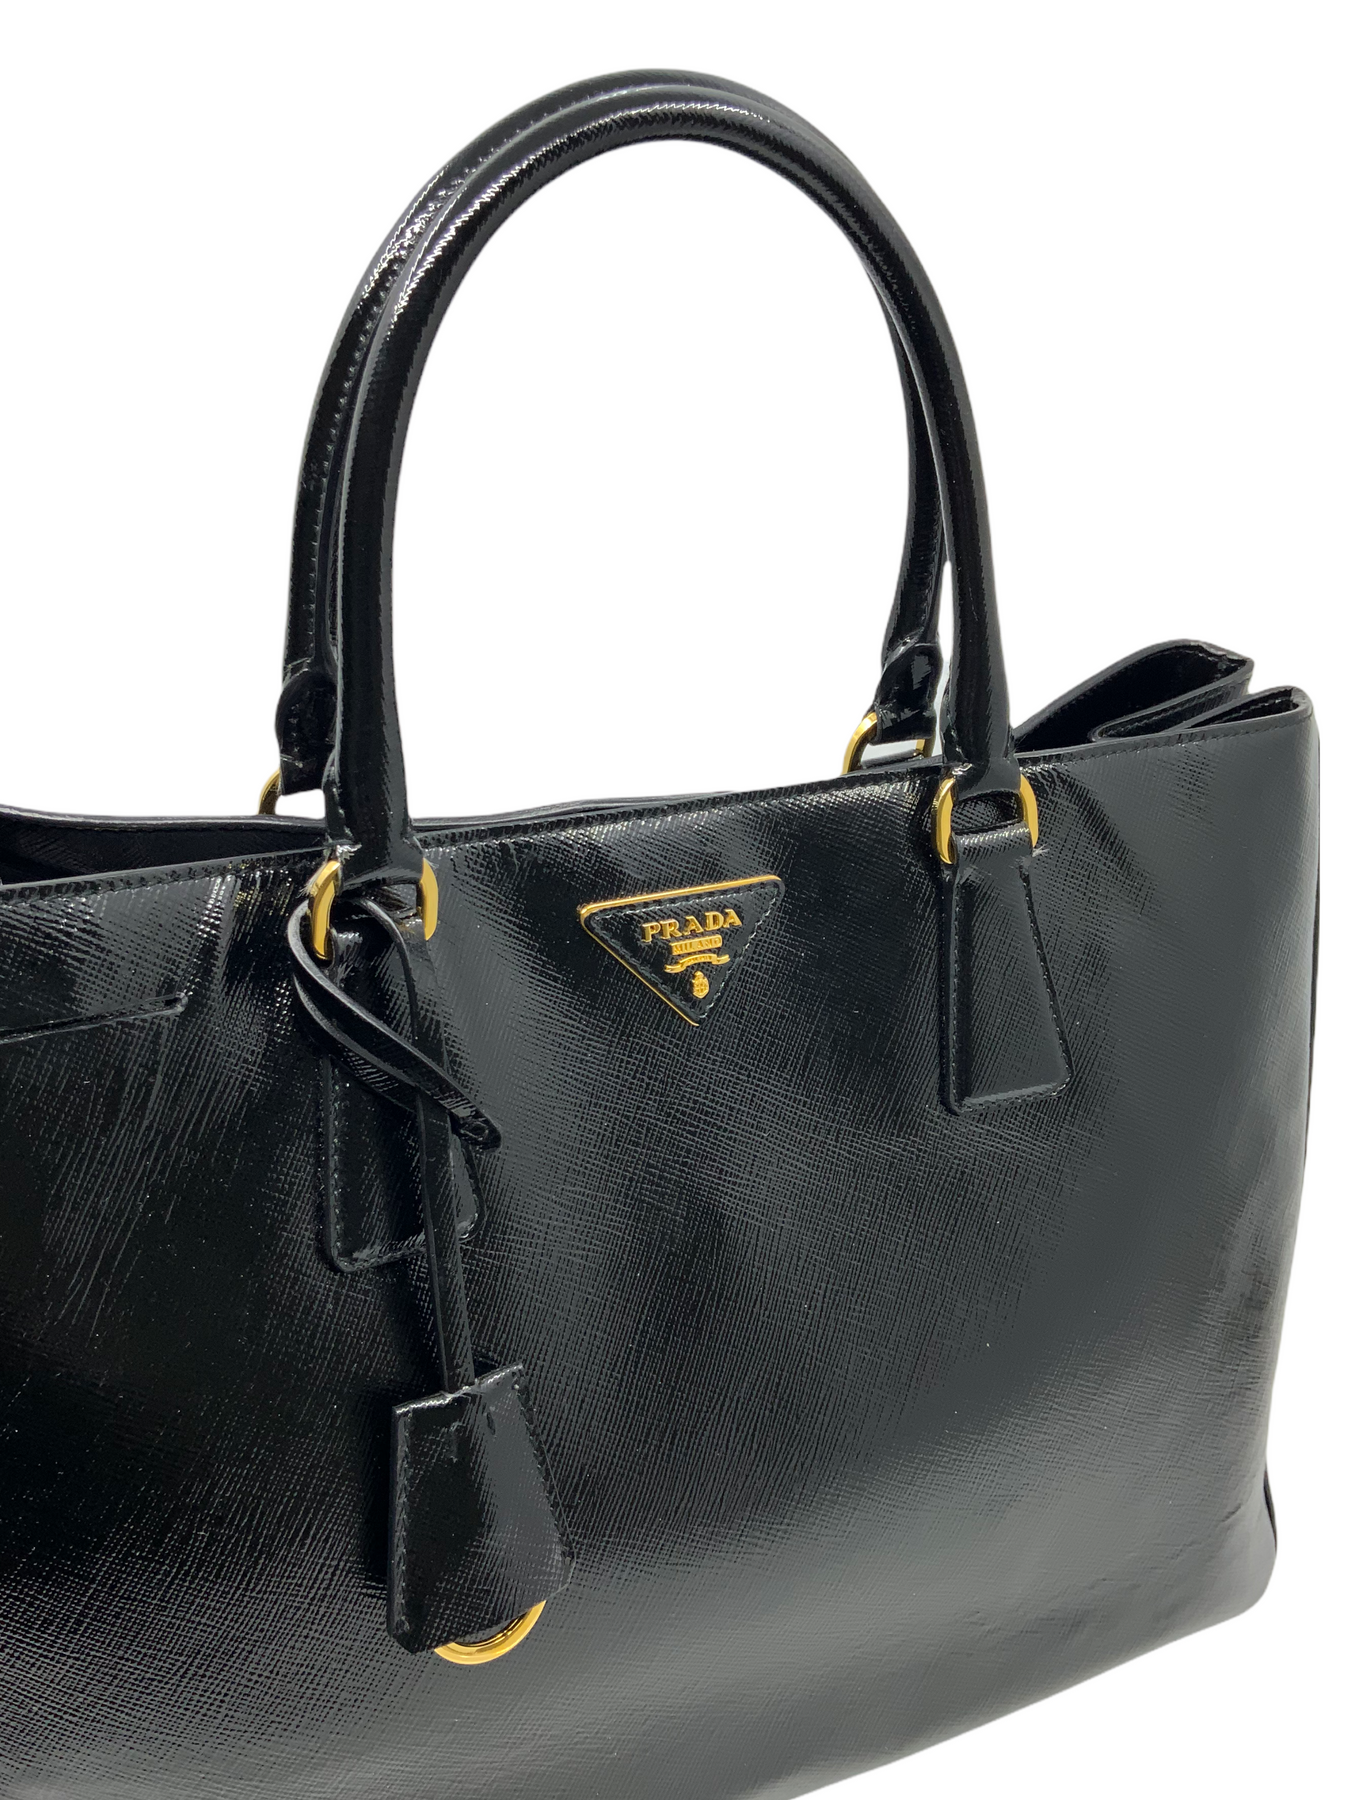 Prada Pattina Patent Saffiano Leather Shoulder Bag